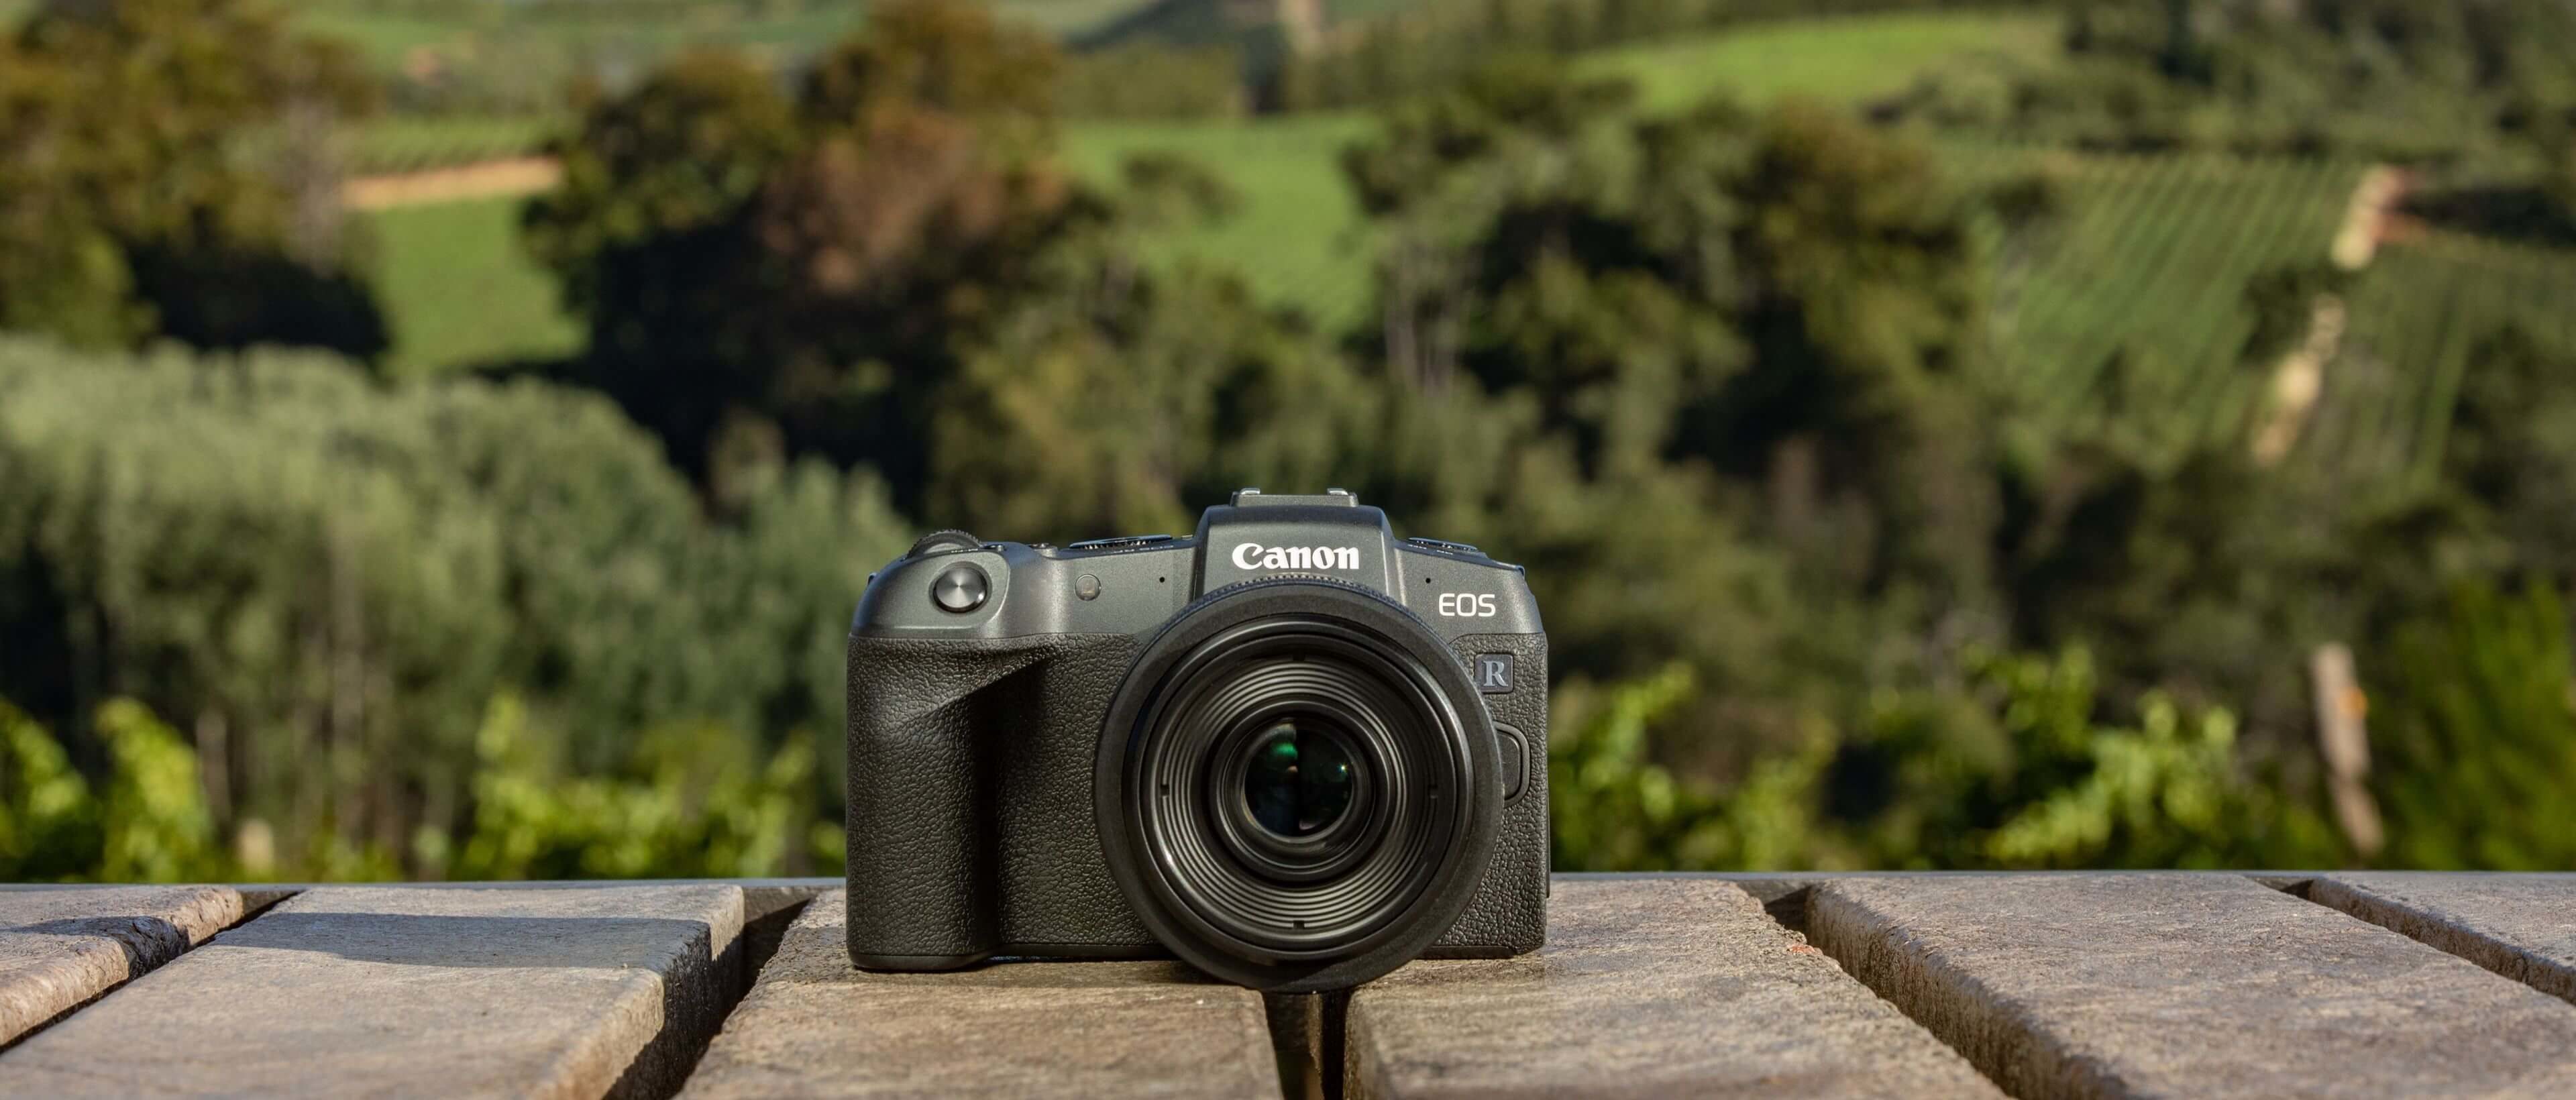 Background: Post Thumbnail: Canon